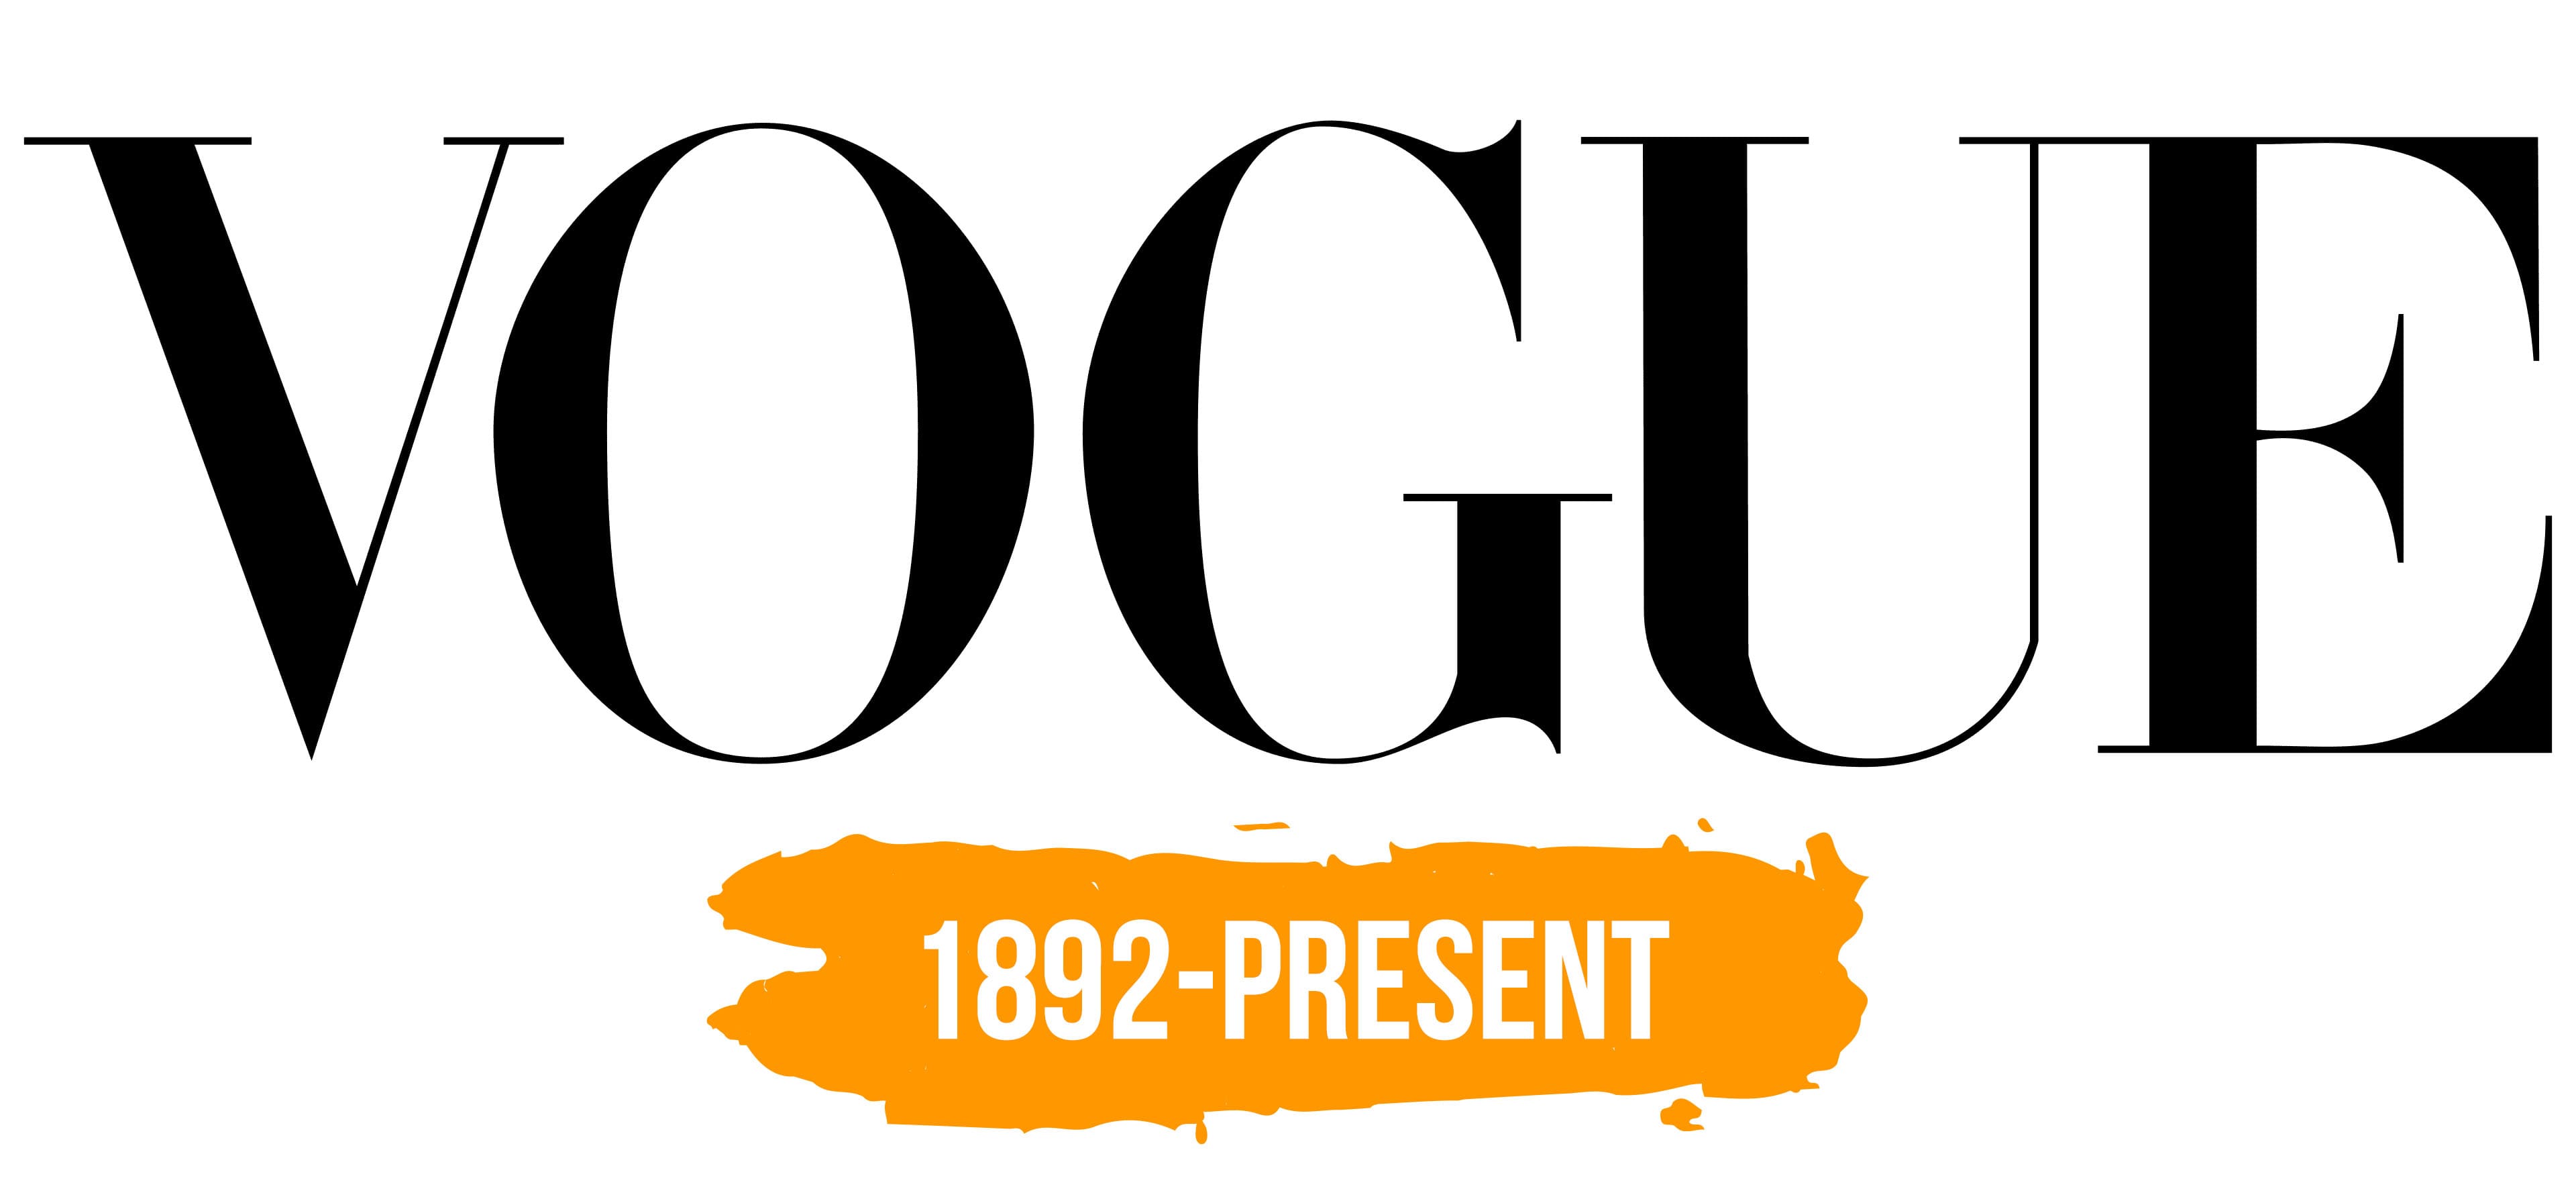 E Vogue Logo J PNG Image With Transparent Background TOPpng | vlr.eng.br